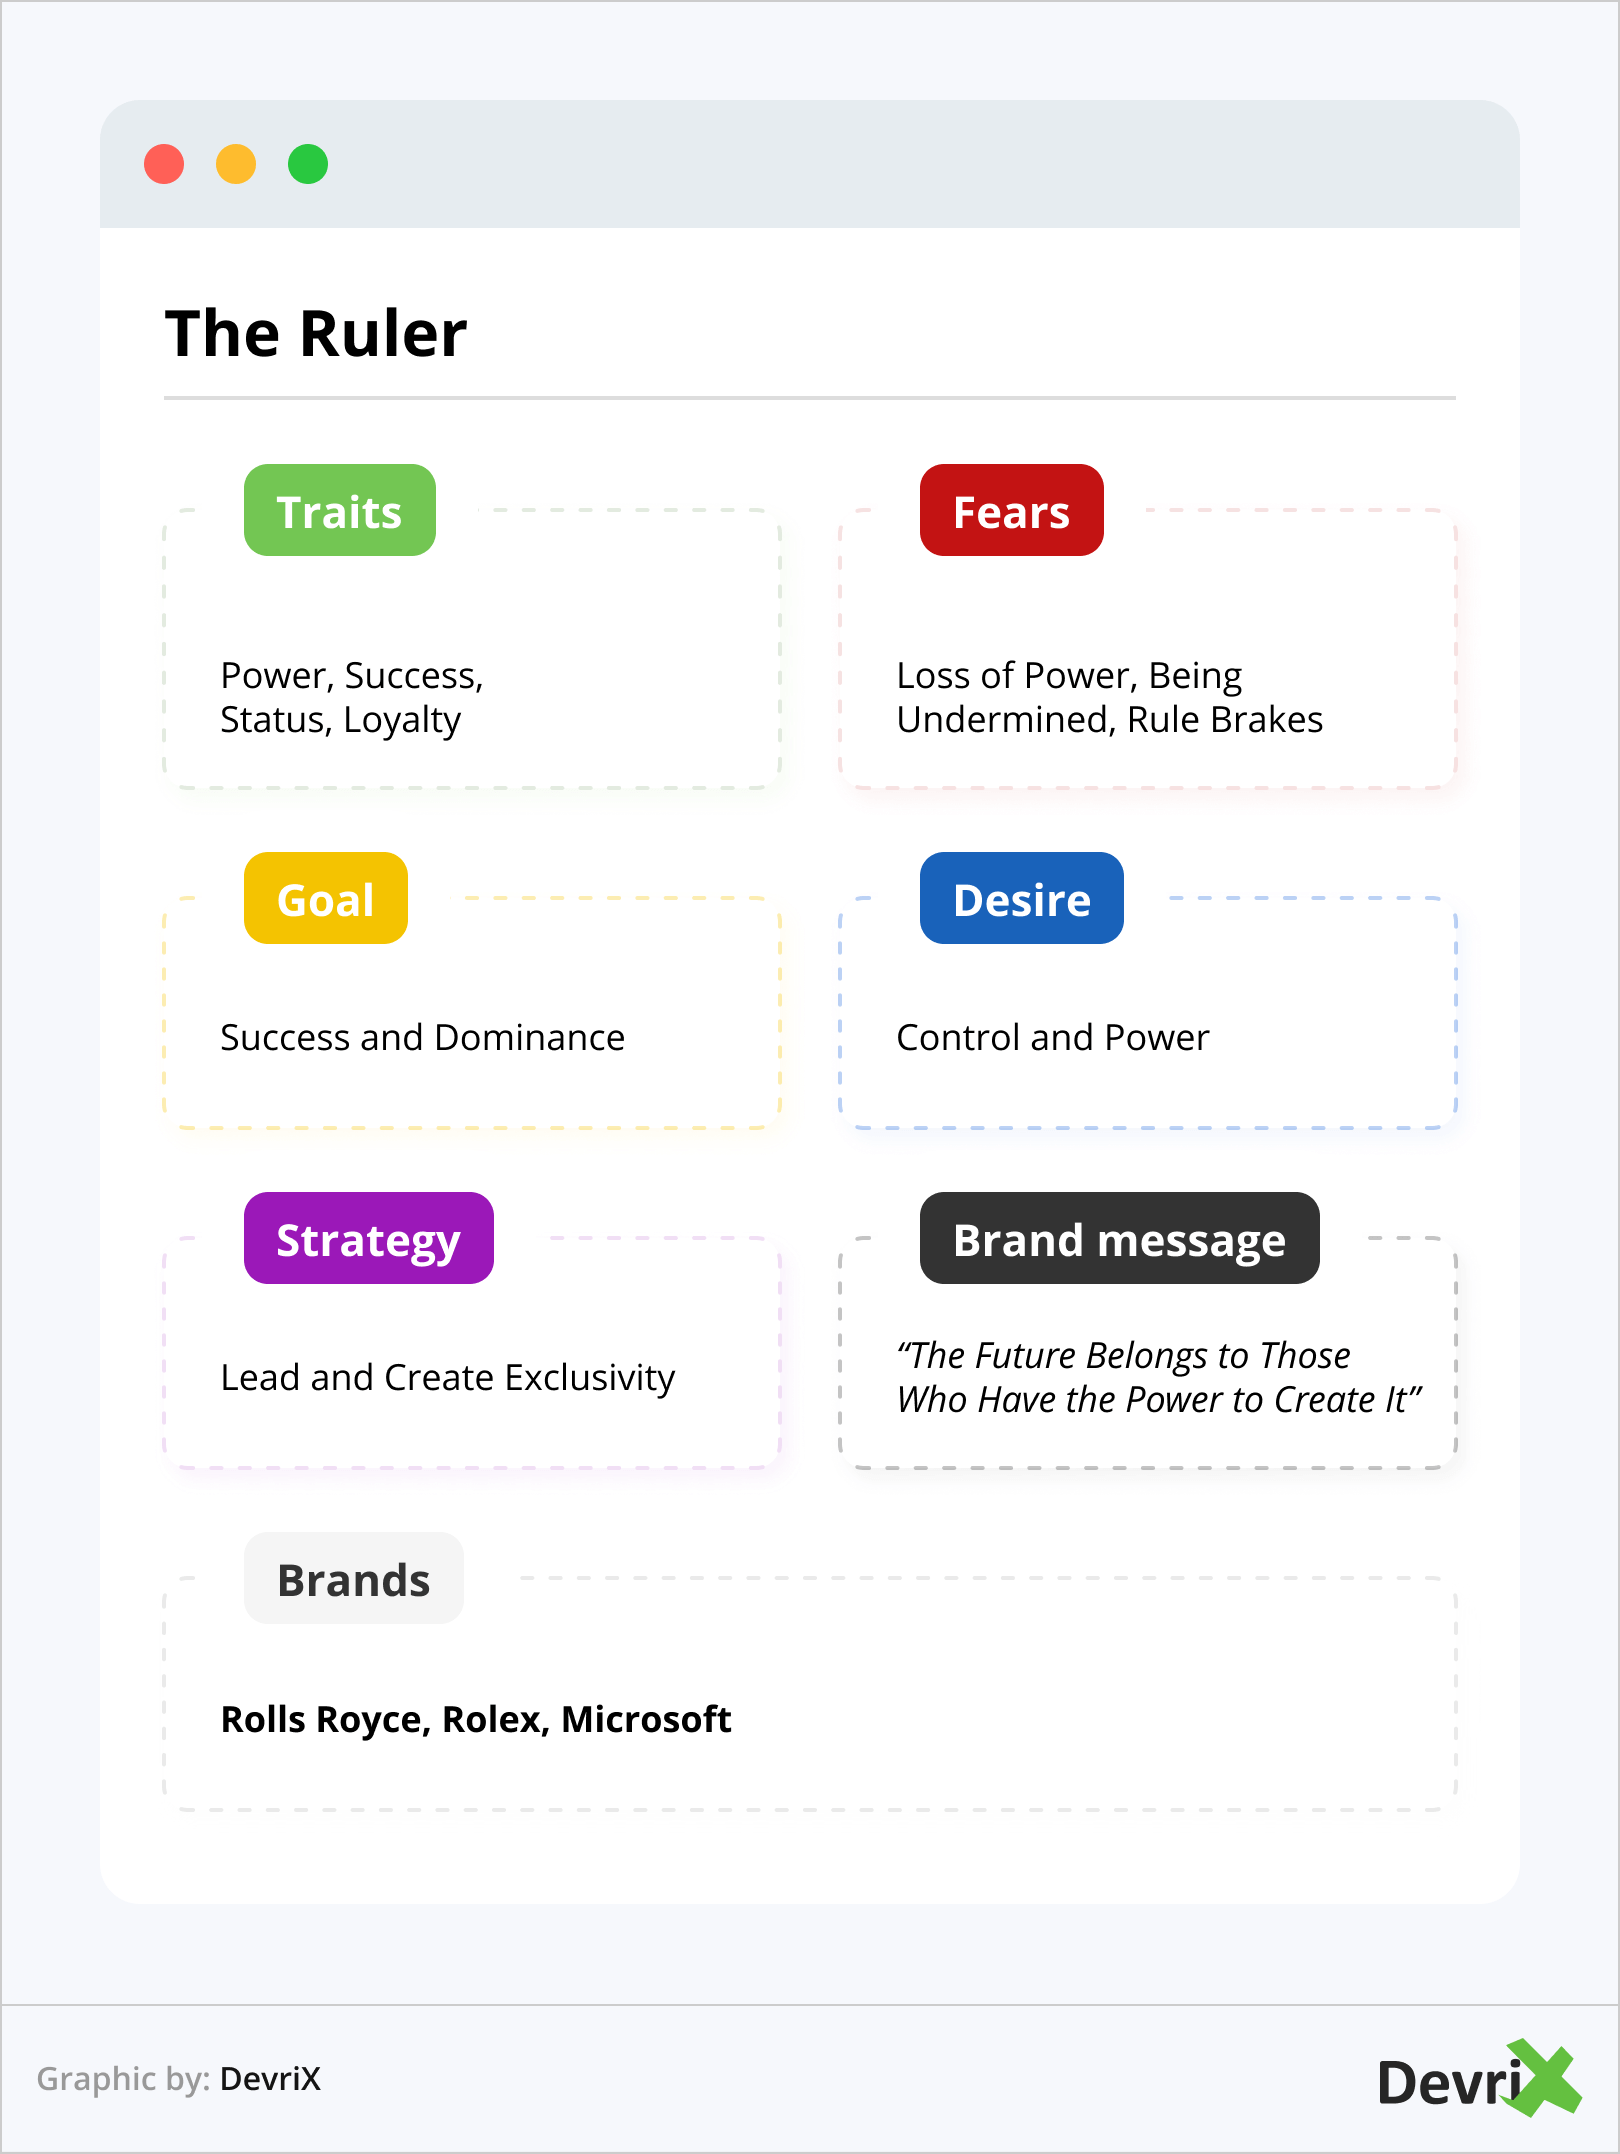 Brand Archetype - The Ruler